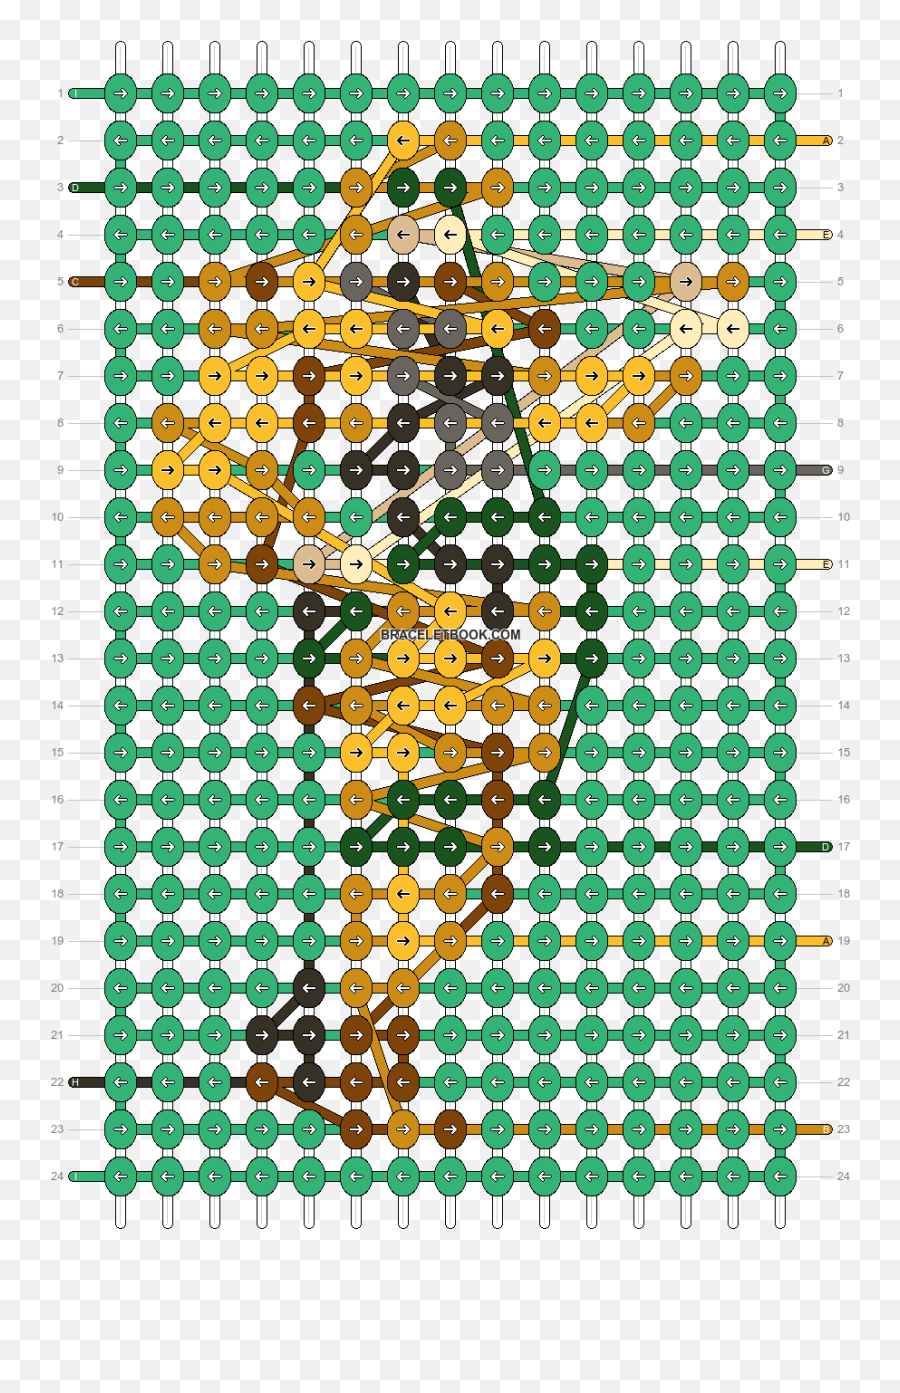 Alpha Pattern 59092 Braceletbook Emoji,Kono Dio Da Transparent